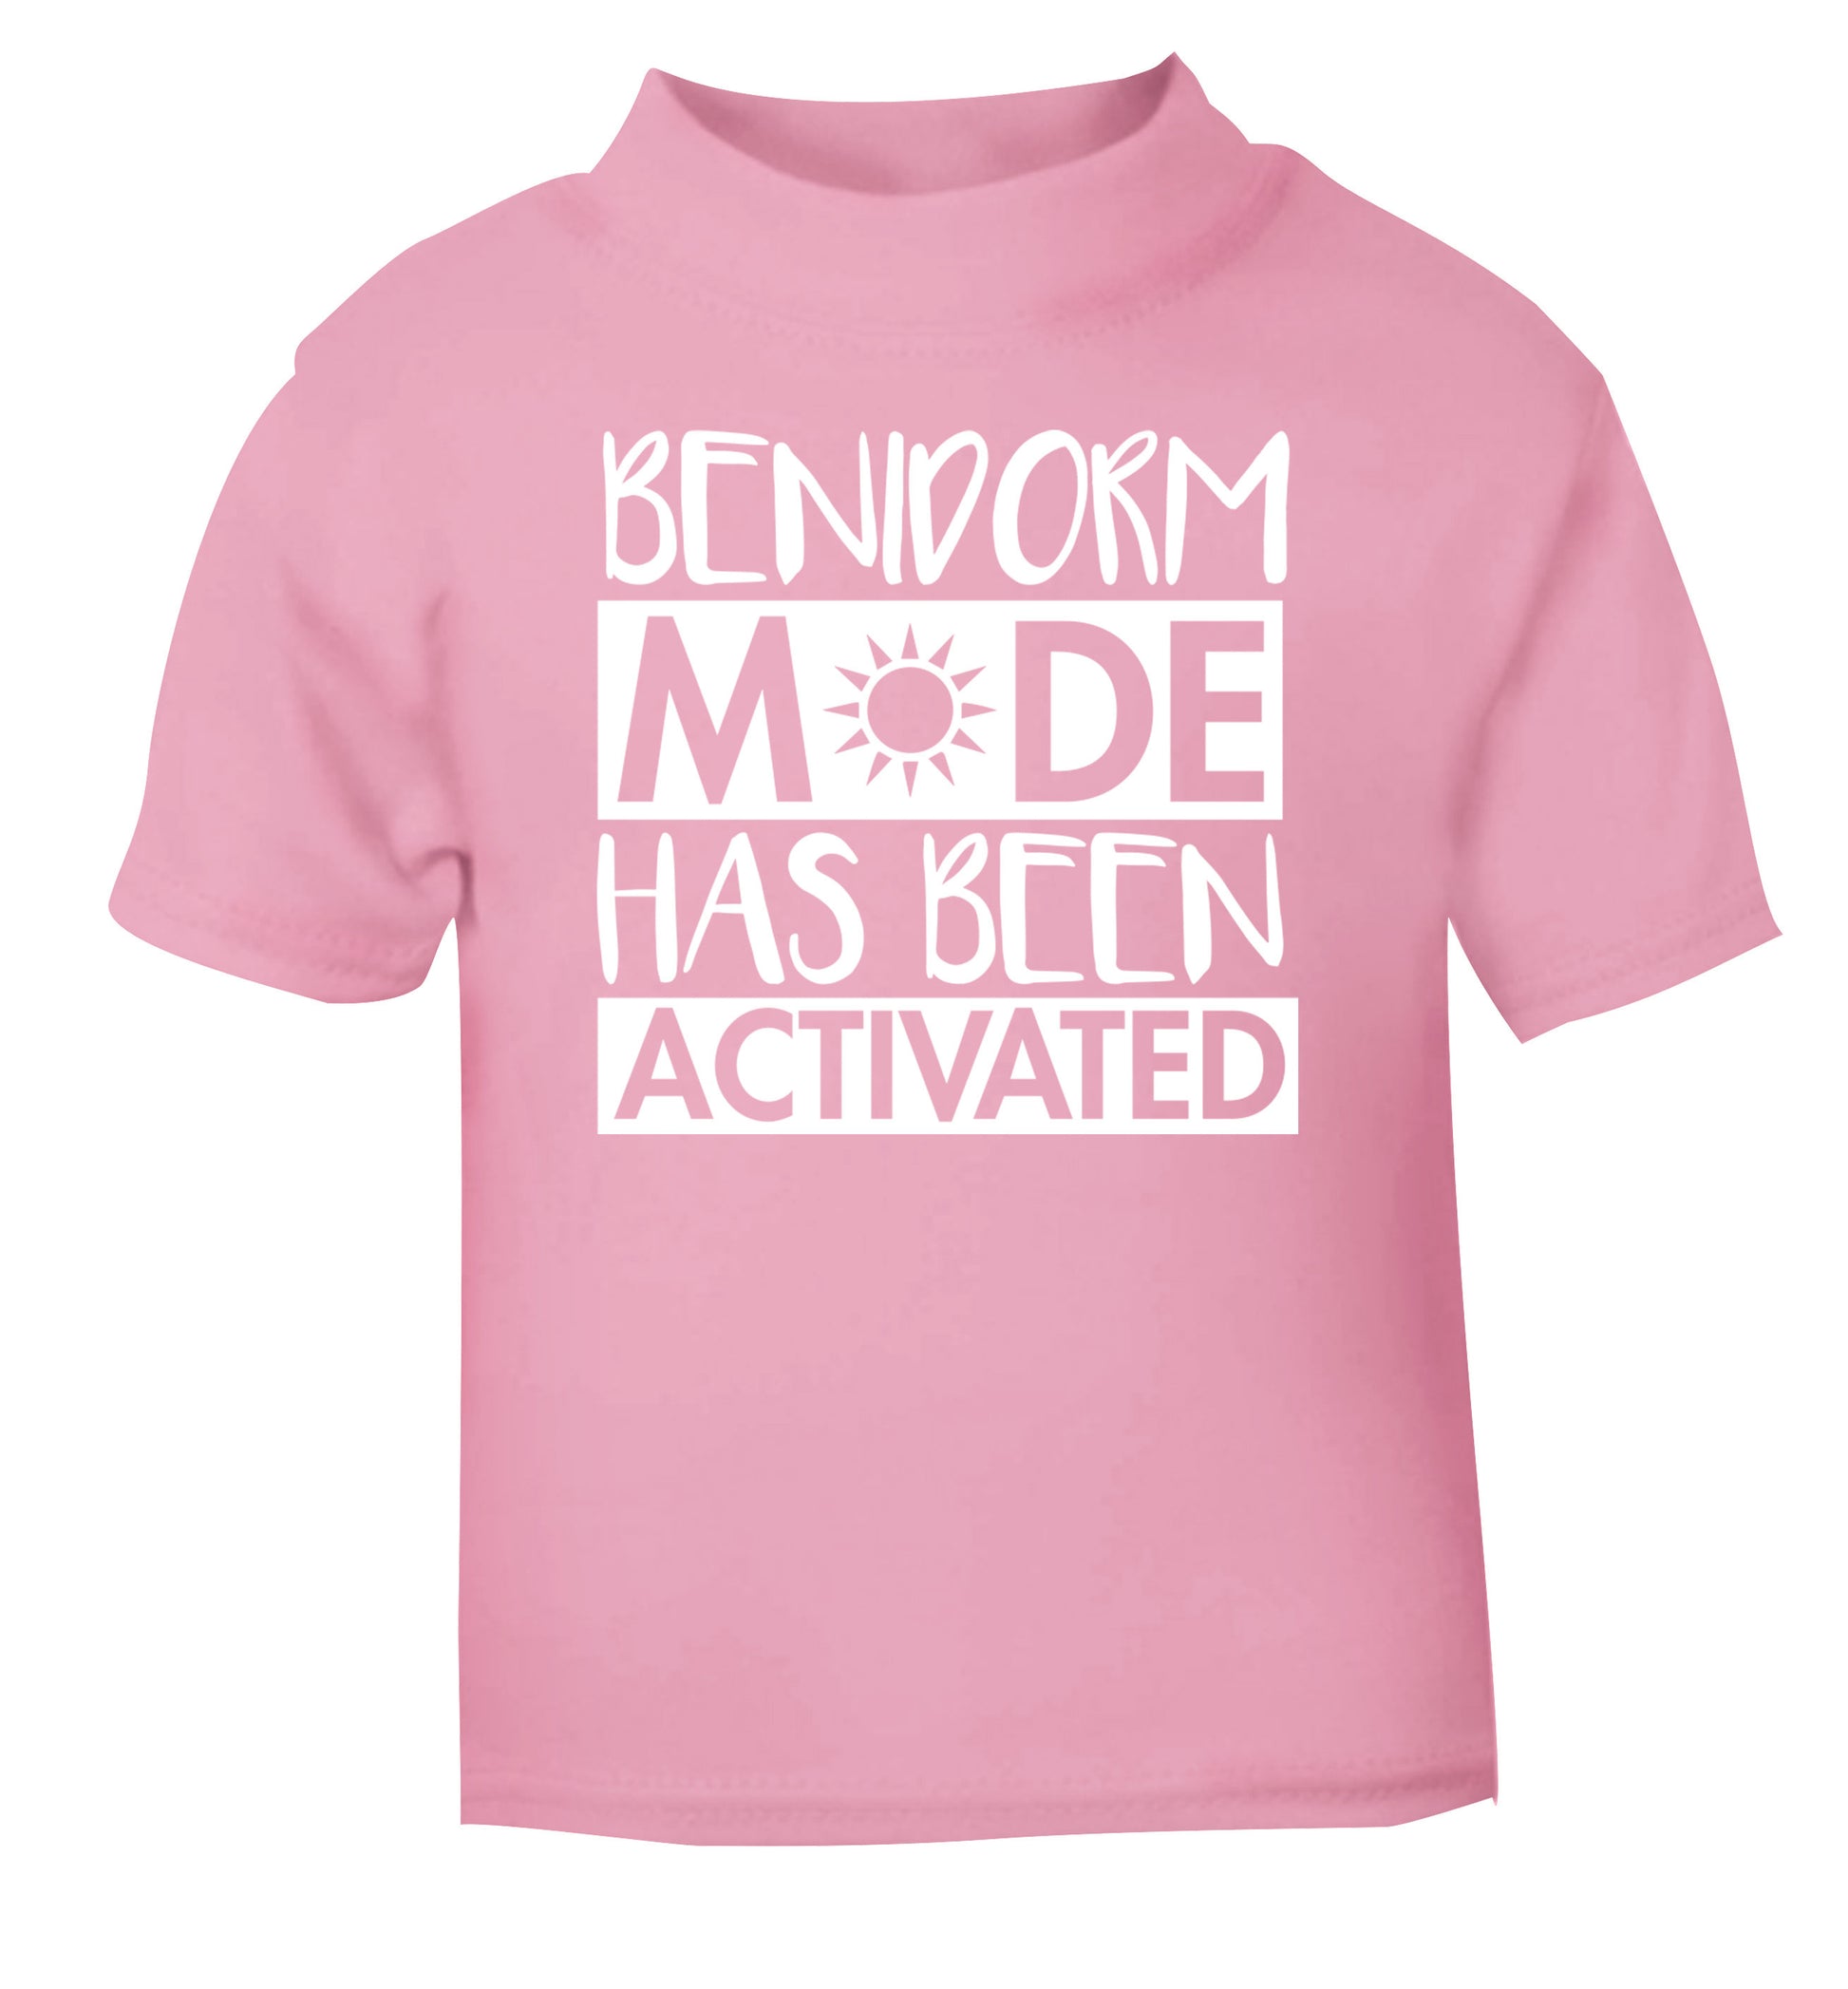 Benidorm mode has been activated light pink Baby Toddler Tshirt 2 Years